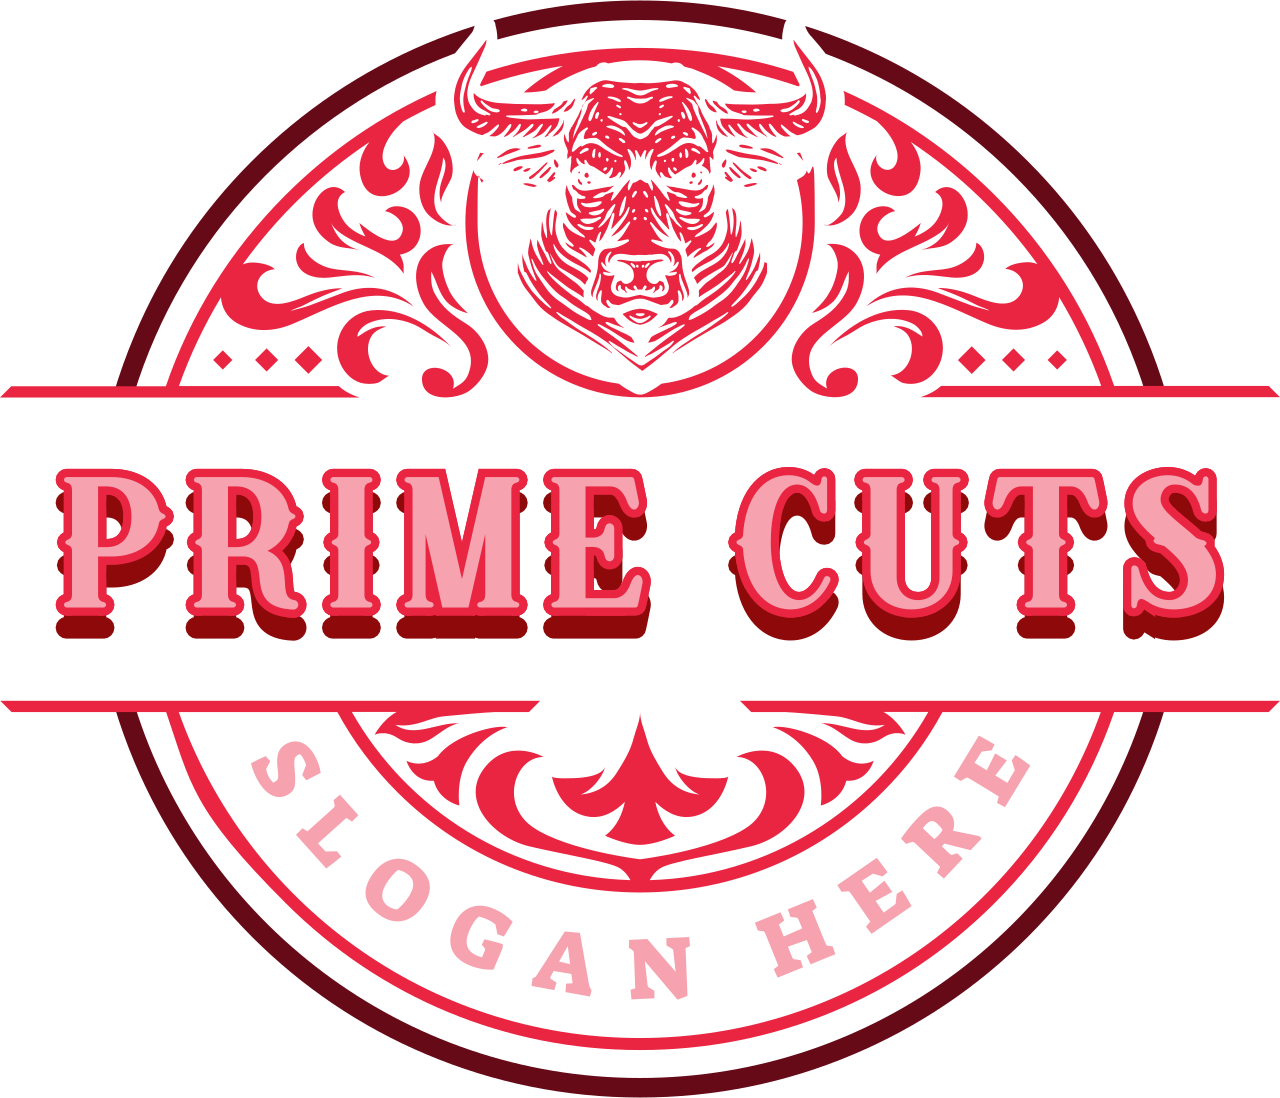 Prime Cuts's logo